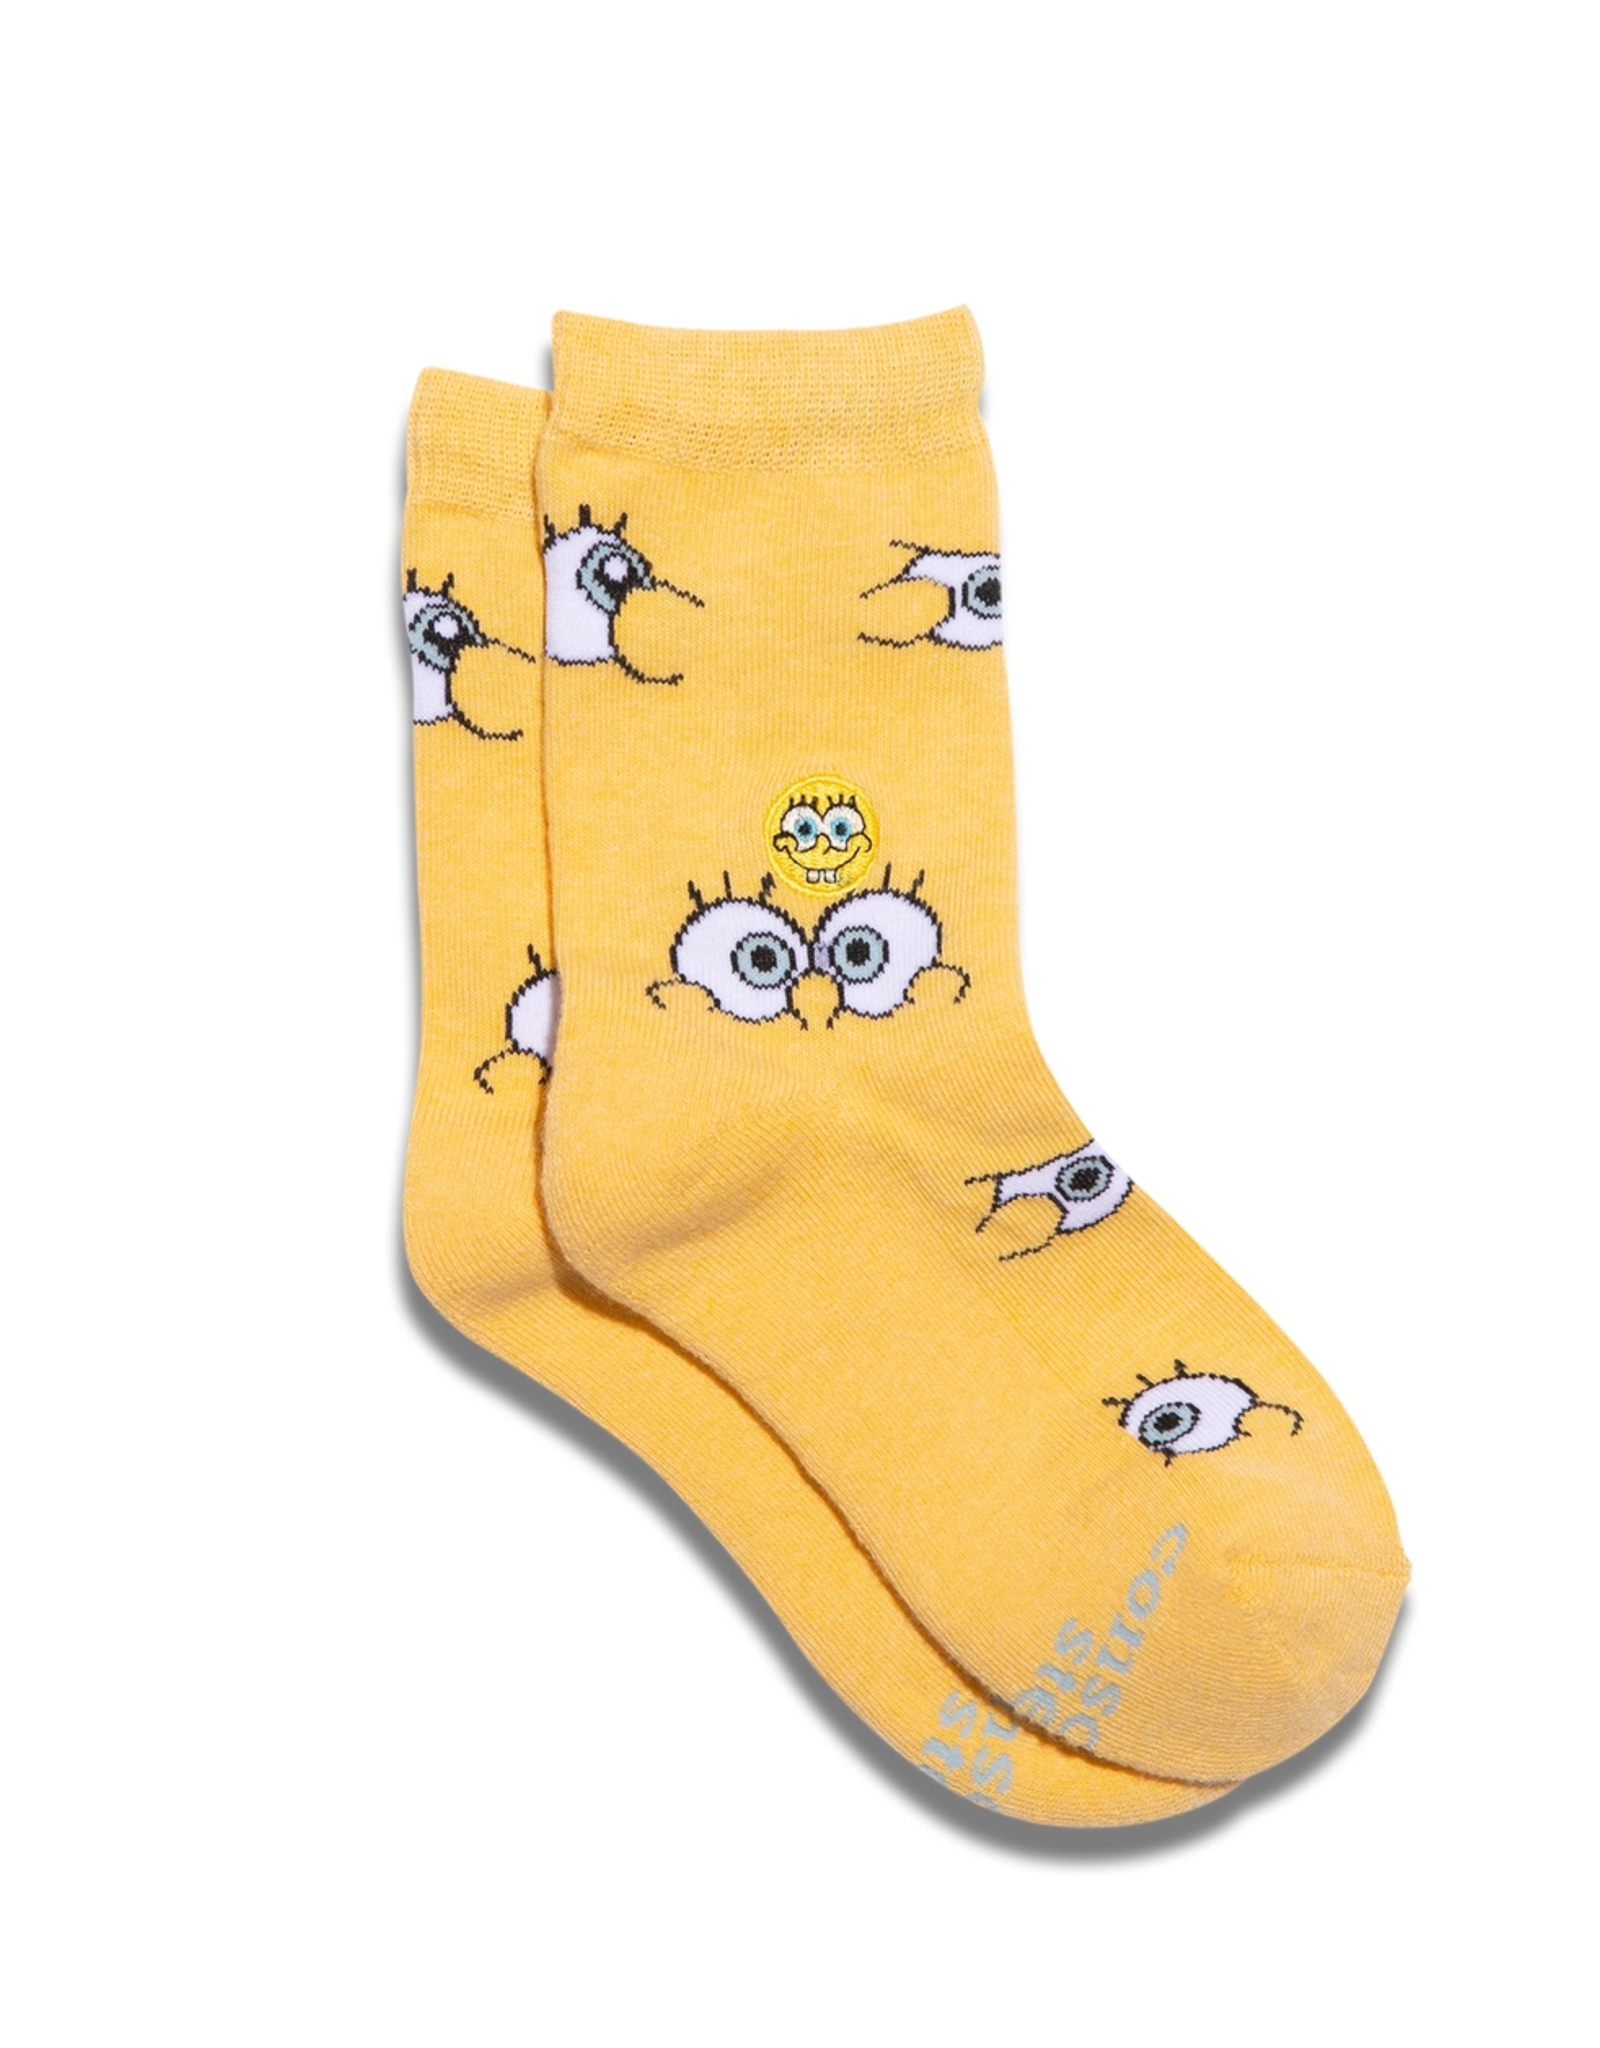 Conscious Step Children’s Socks That Protect Oceans - Spongebob